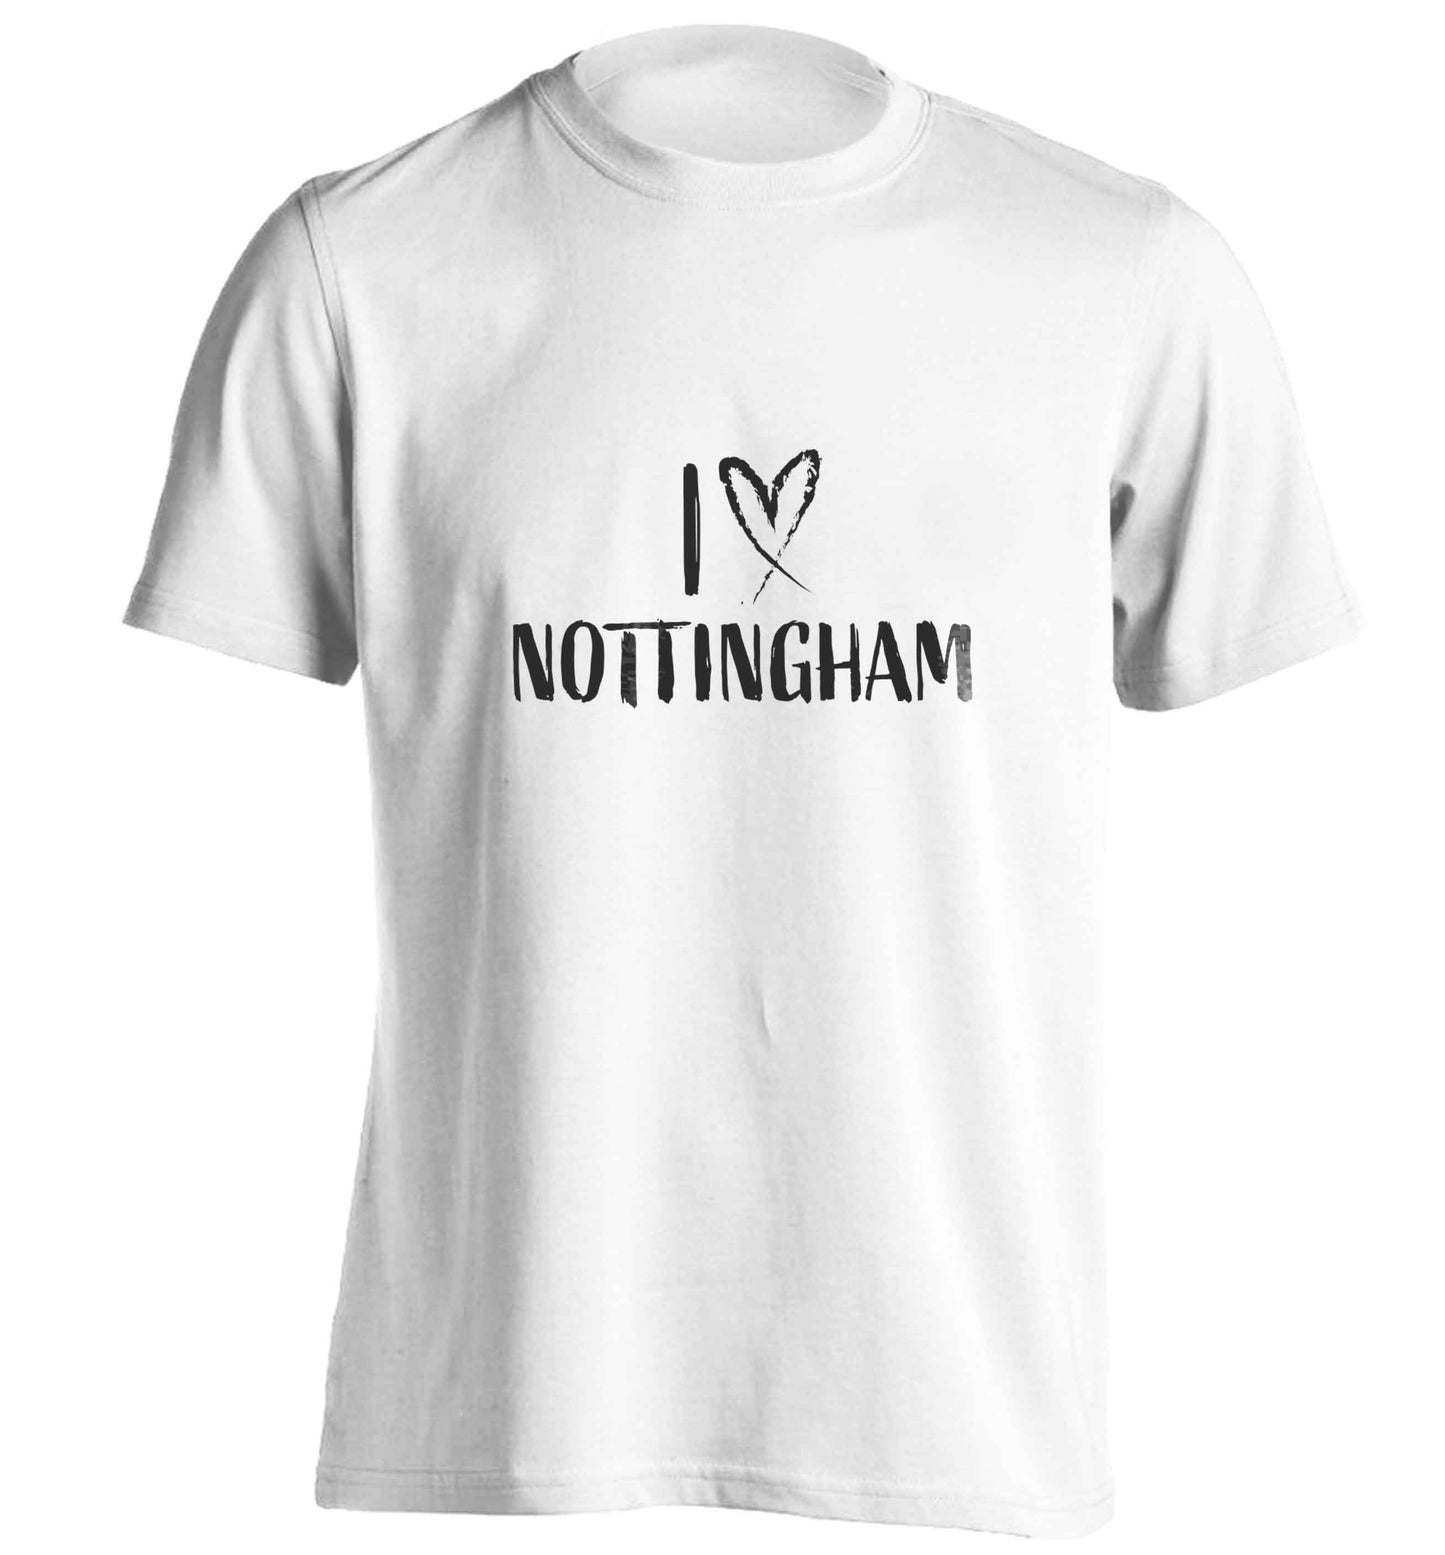 I love Nottingham adults unisex white Tshirt 2XL